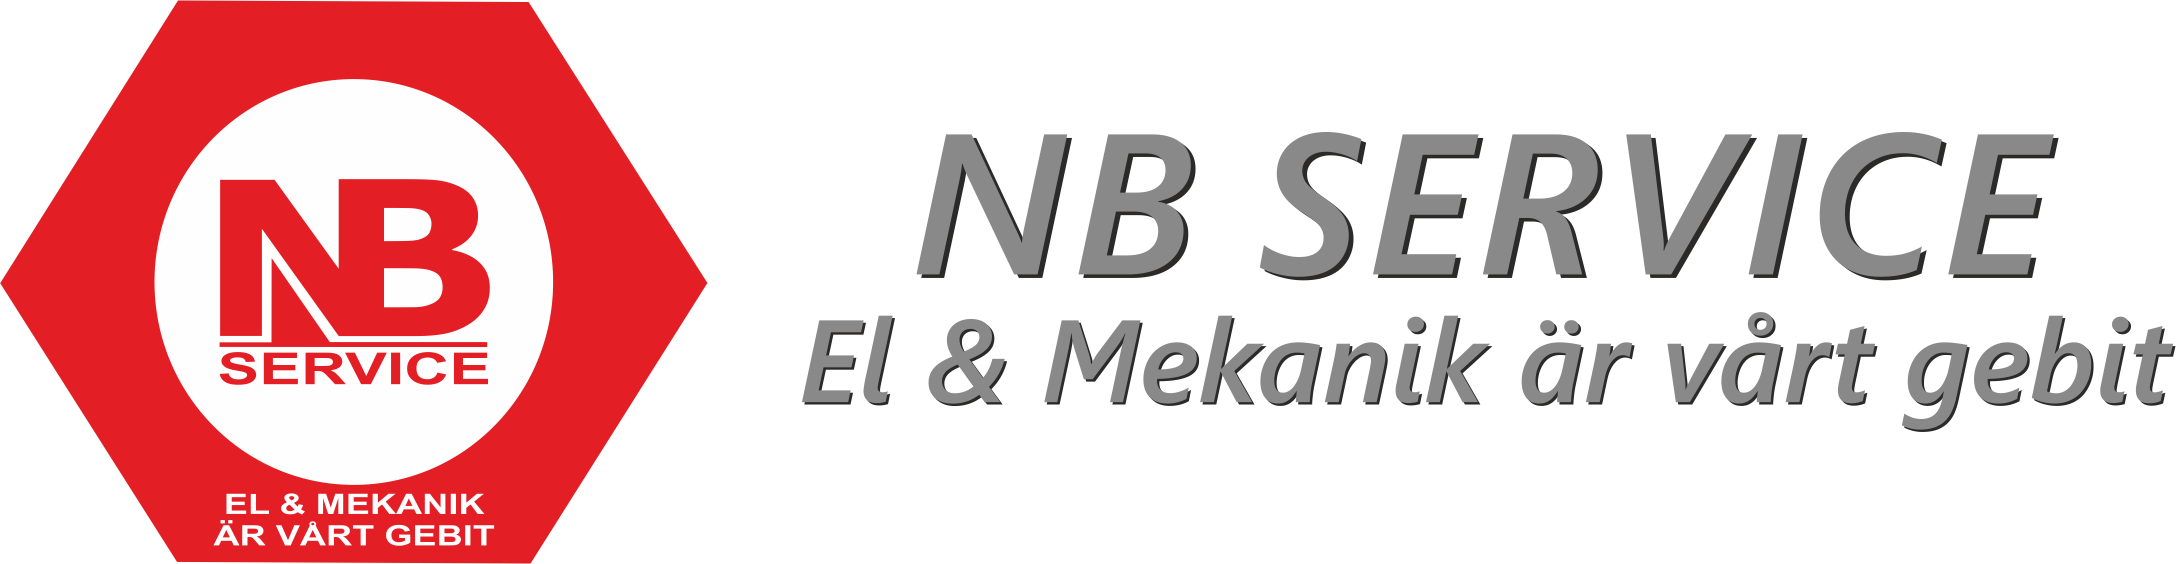 NB SERVICE AB Logo